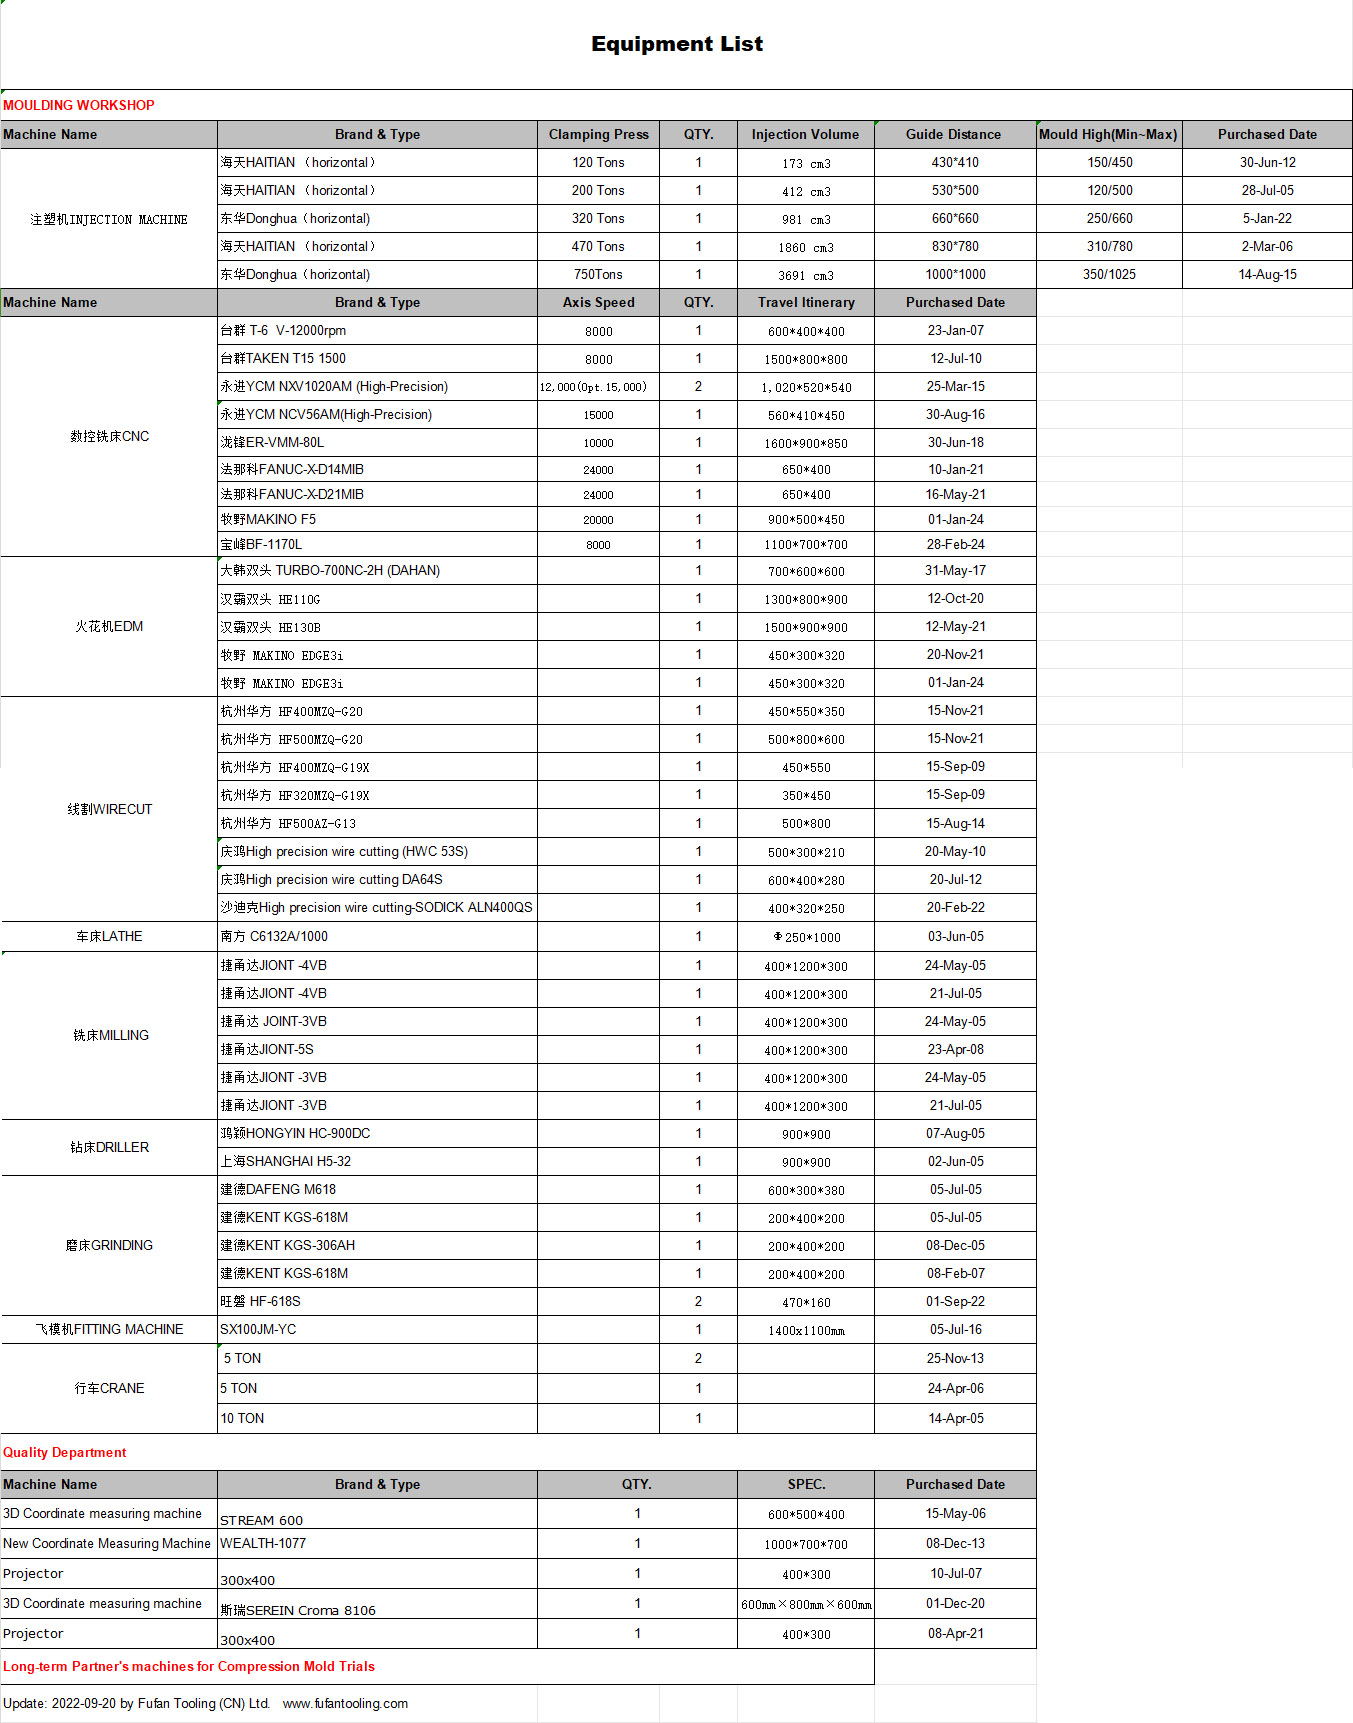 Equipment List-Fufan Tooling CN Ltd_Sheet1